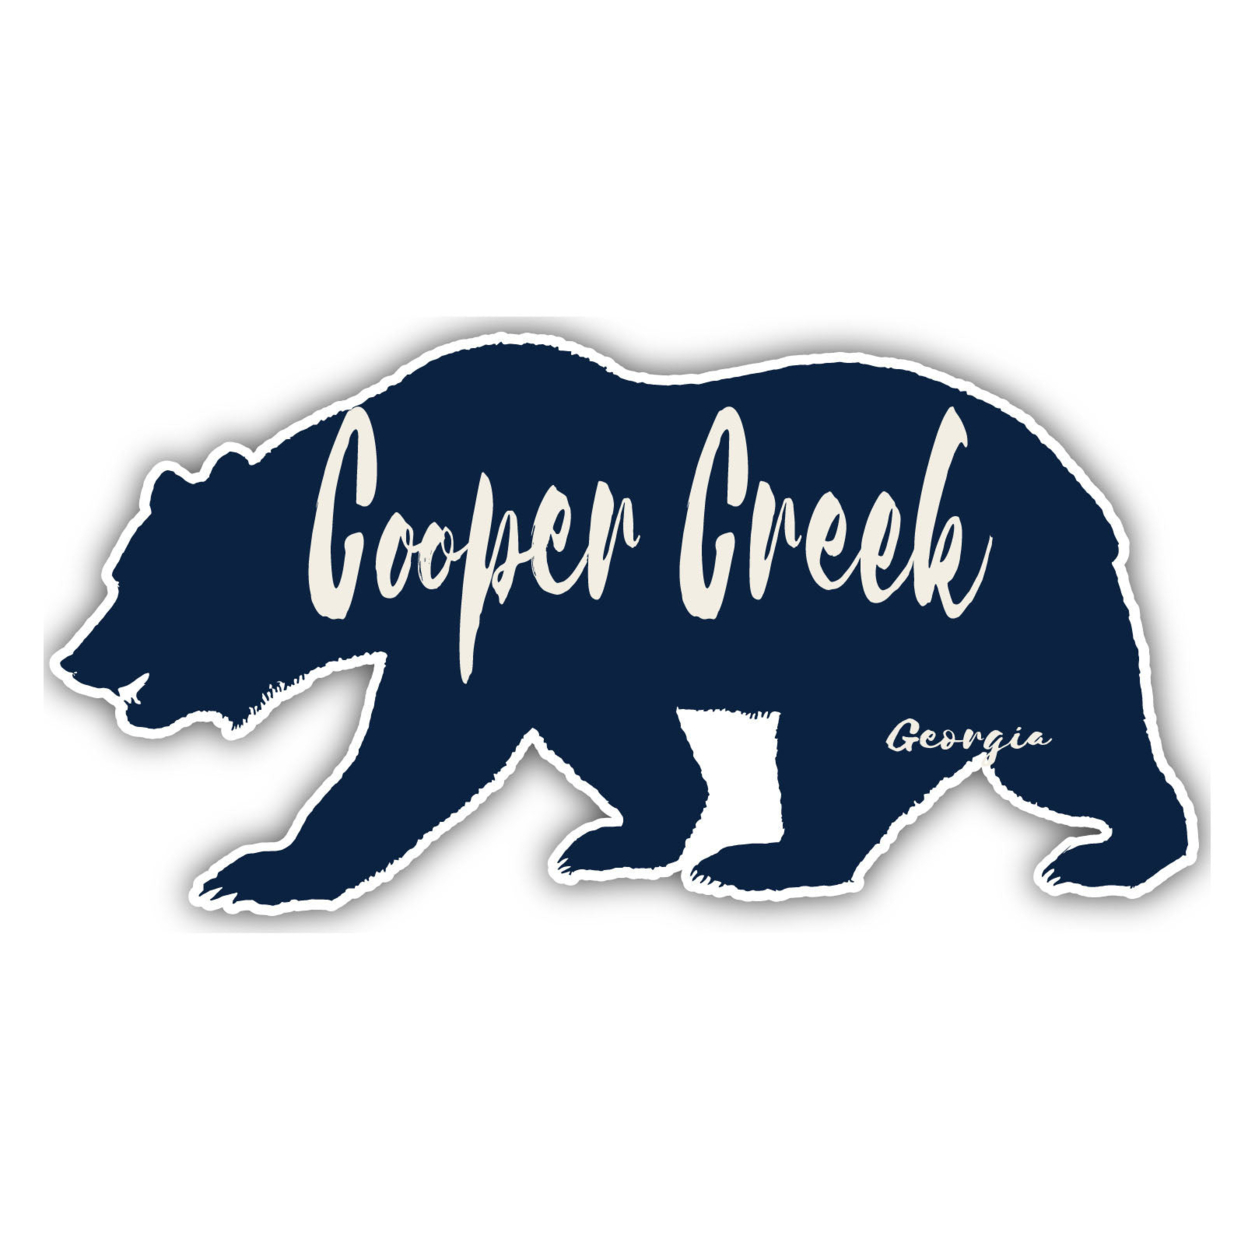 Cooper Creek Georgia Souvenir Decorative Stickers (Choose Theme And Size) - 4-Pack, 6-Inch, Bear